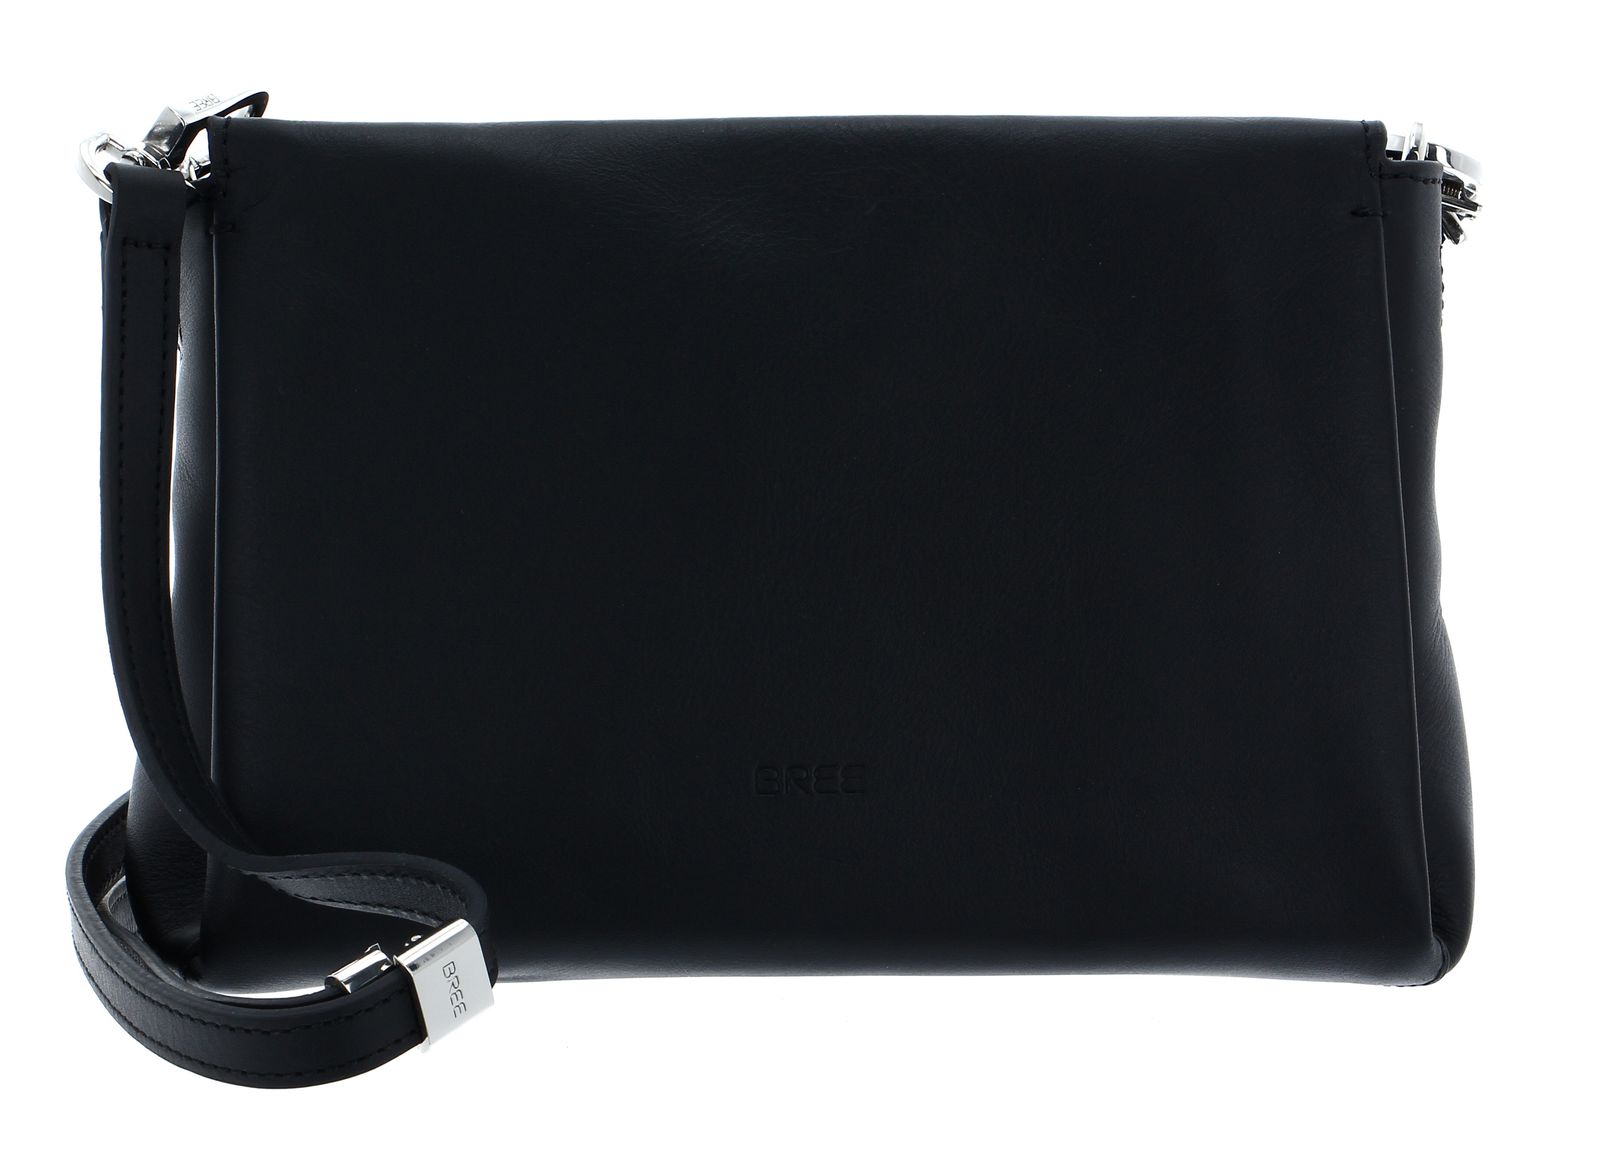 BREE Pure 14 Cross Shoulder S Black | Buy bags, purses & accessories ...